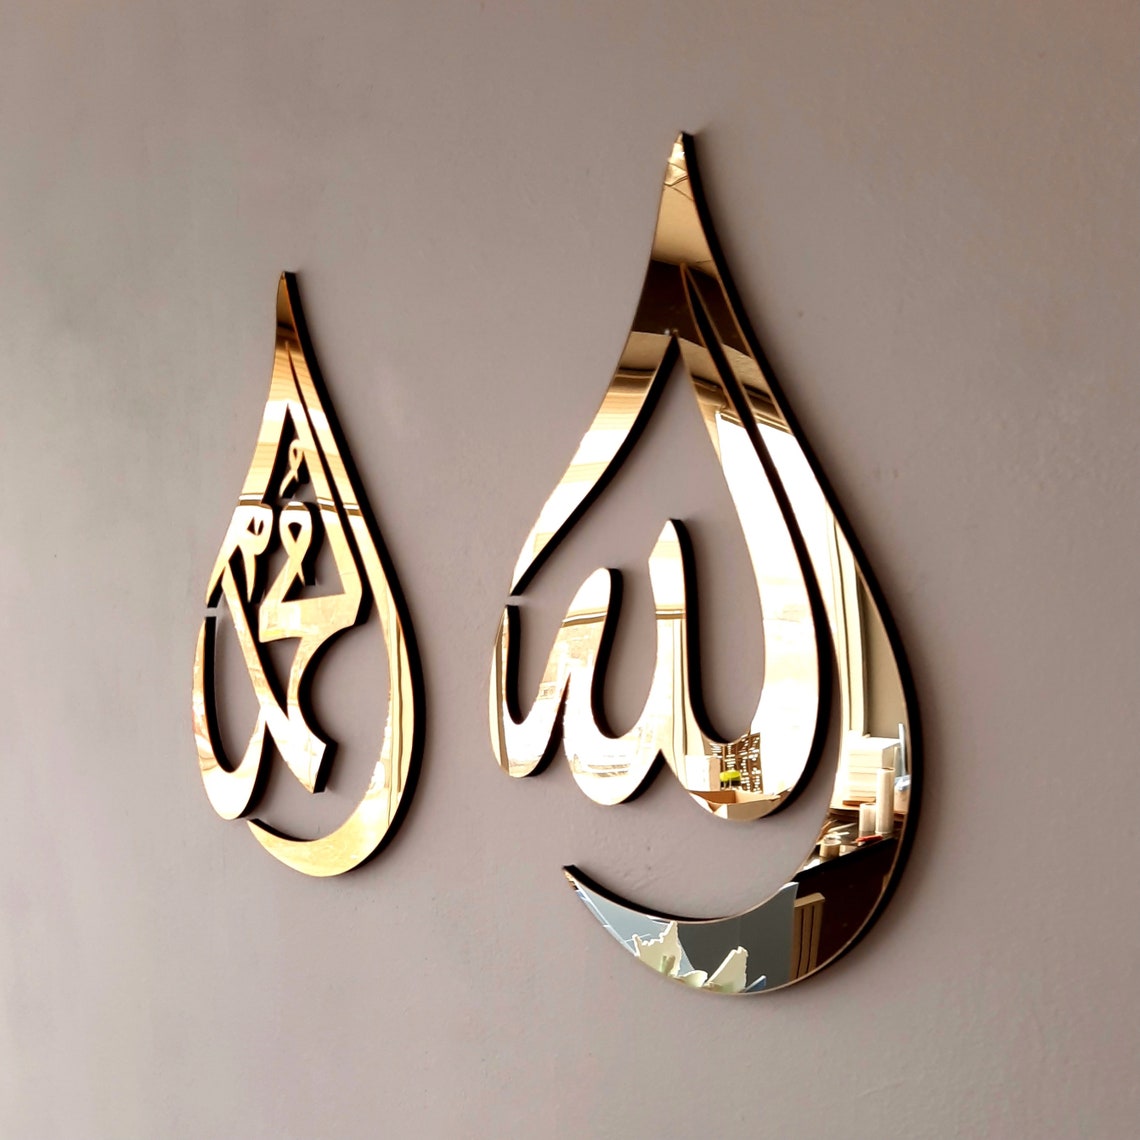 Allah (SWT), Mohammad (PBUH) Acrylic/Wooden Islamic Wall Art, Islamic Home Decor,